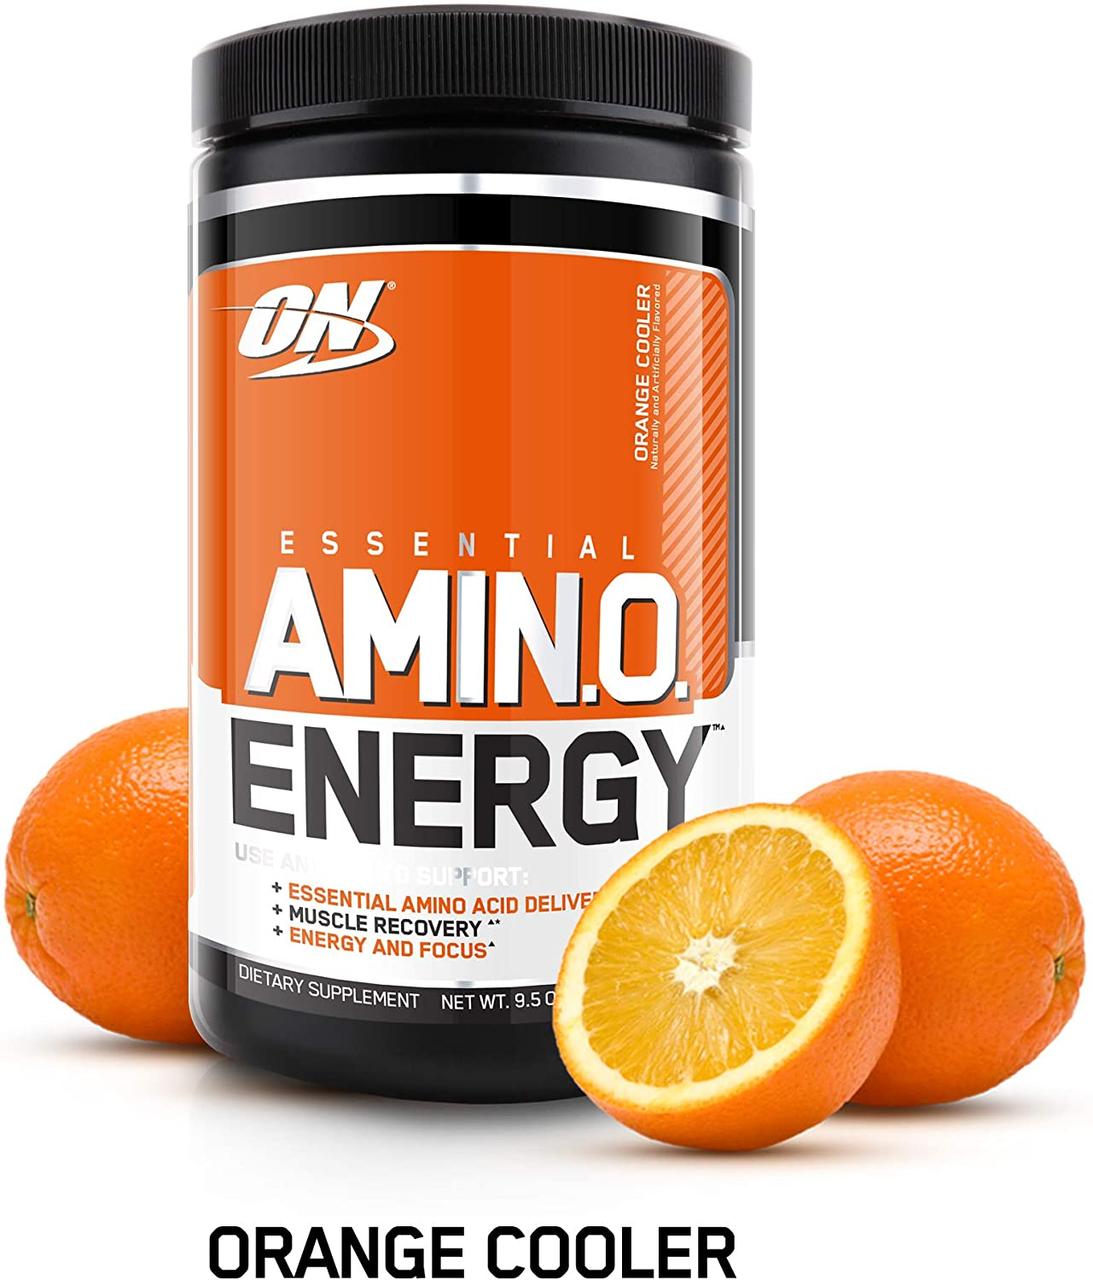 Комплекс аминокислот Optimum Nutrition Amino Energy (270 г) оптимум амино энерджи orange cooler,  мл, Optimum Nutrition. Аминокислотные комплексы. 